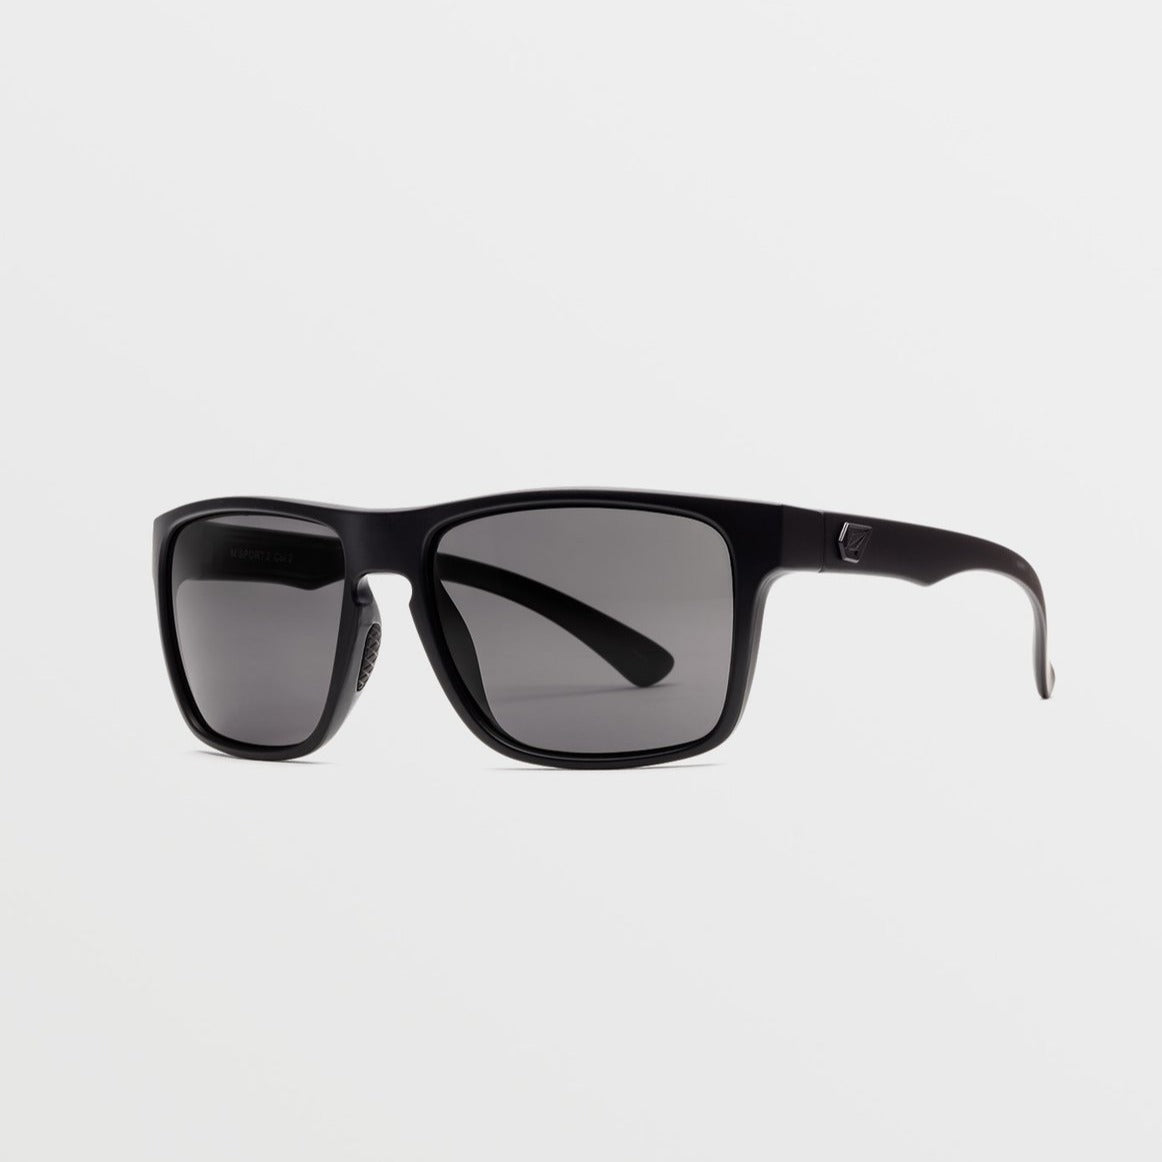 Volcom Sunglasses Trick Polarized Sunglasses Matte Blk Polar